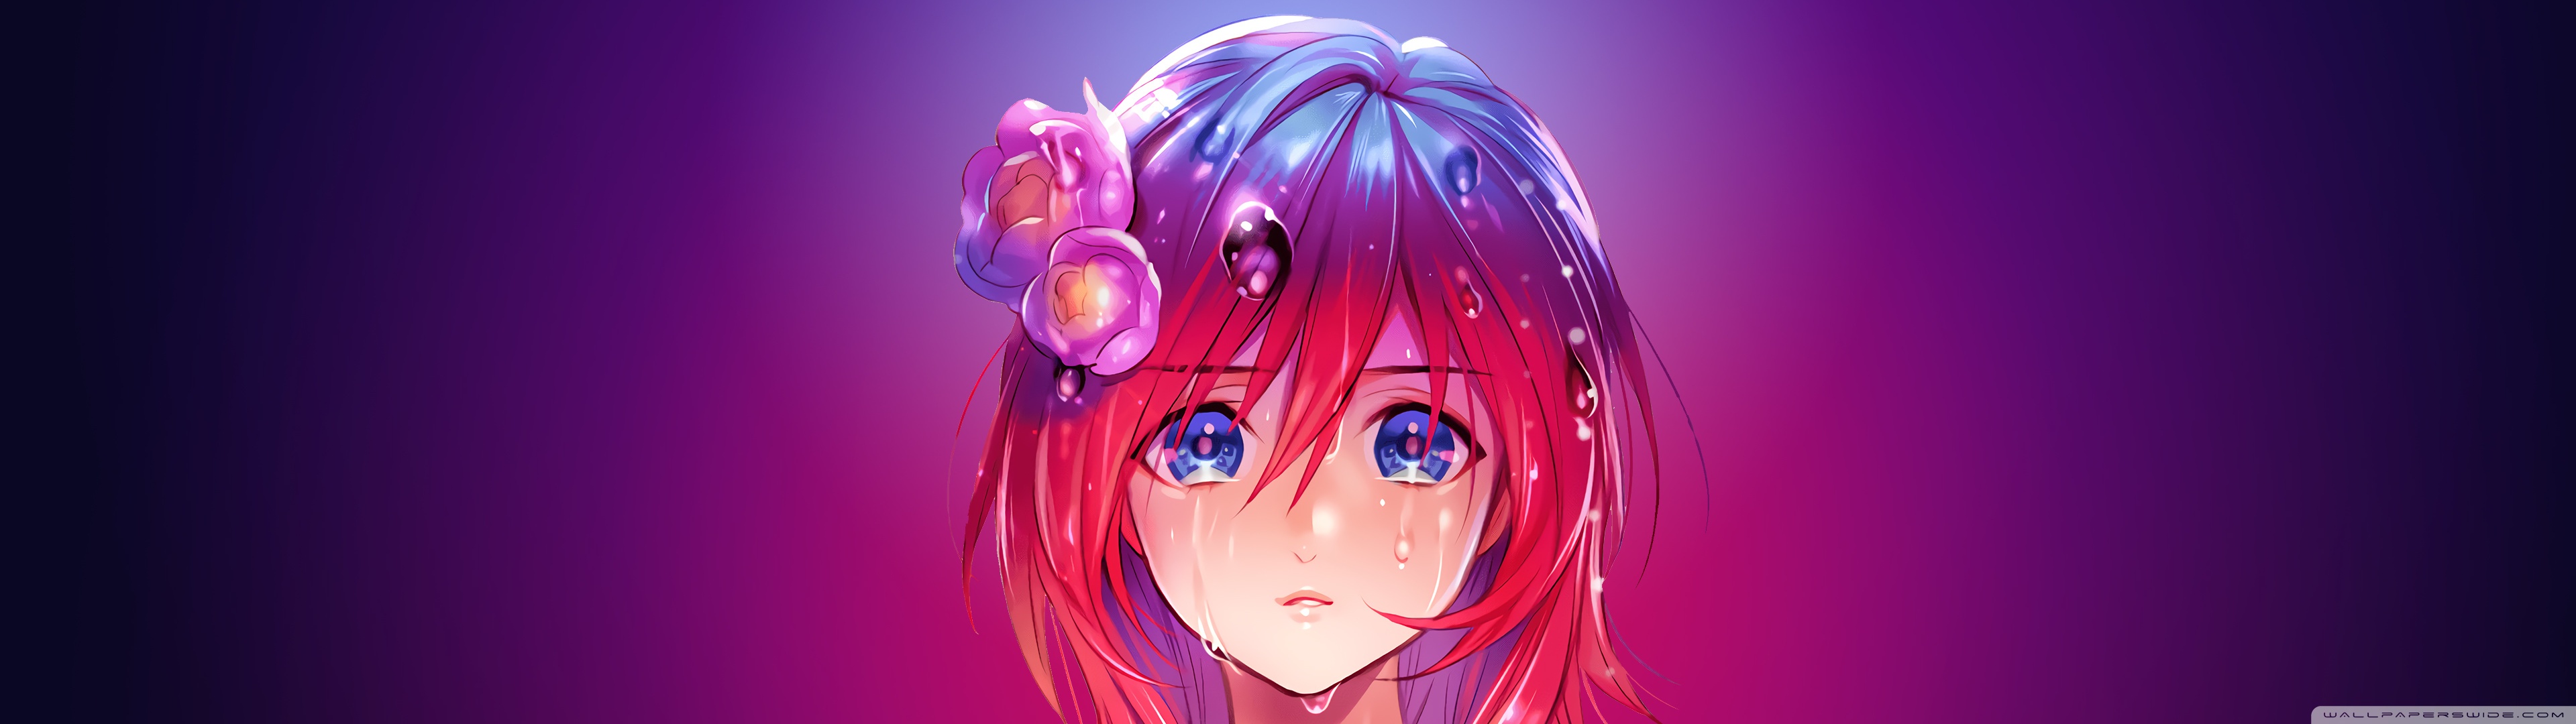 Sad Anime Girl Ultra HD Desktop Background Wallpaper for: Widescreen & UltraWide Desktop & Laptop, Multi Display, Dual & Triple Monitor, Tablet